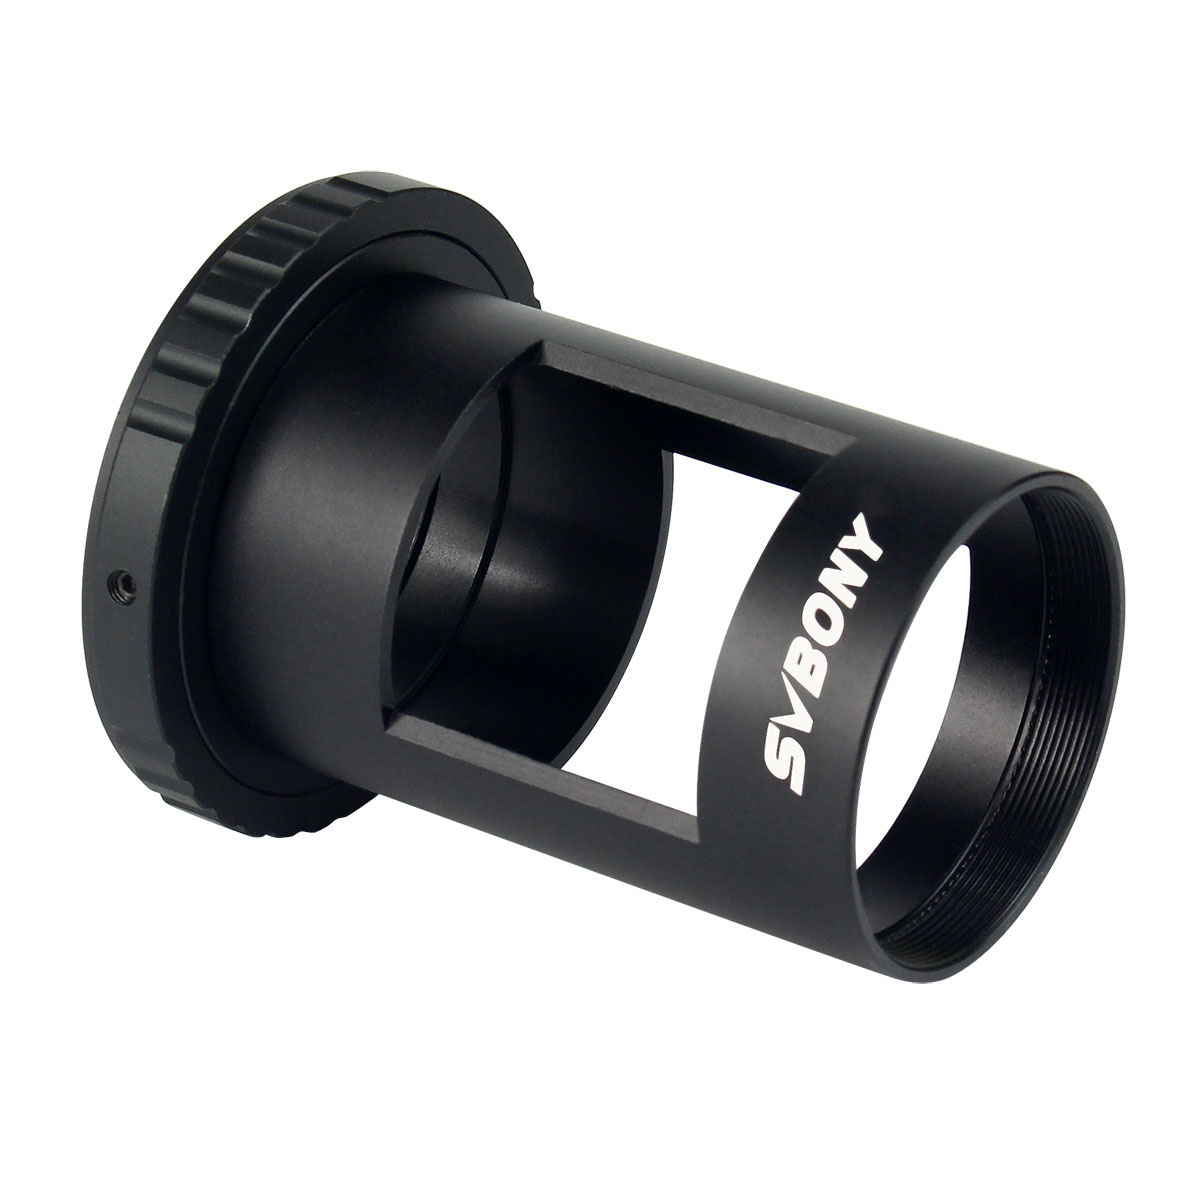 SVBONY-Full-Metal-Spotting-Scope-Camera-Adapter-Fits-Eyepiece-OD-475mm-w-T-Ring-1817318-4